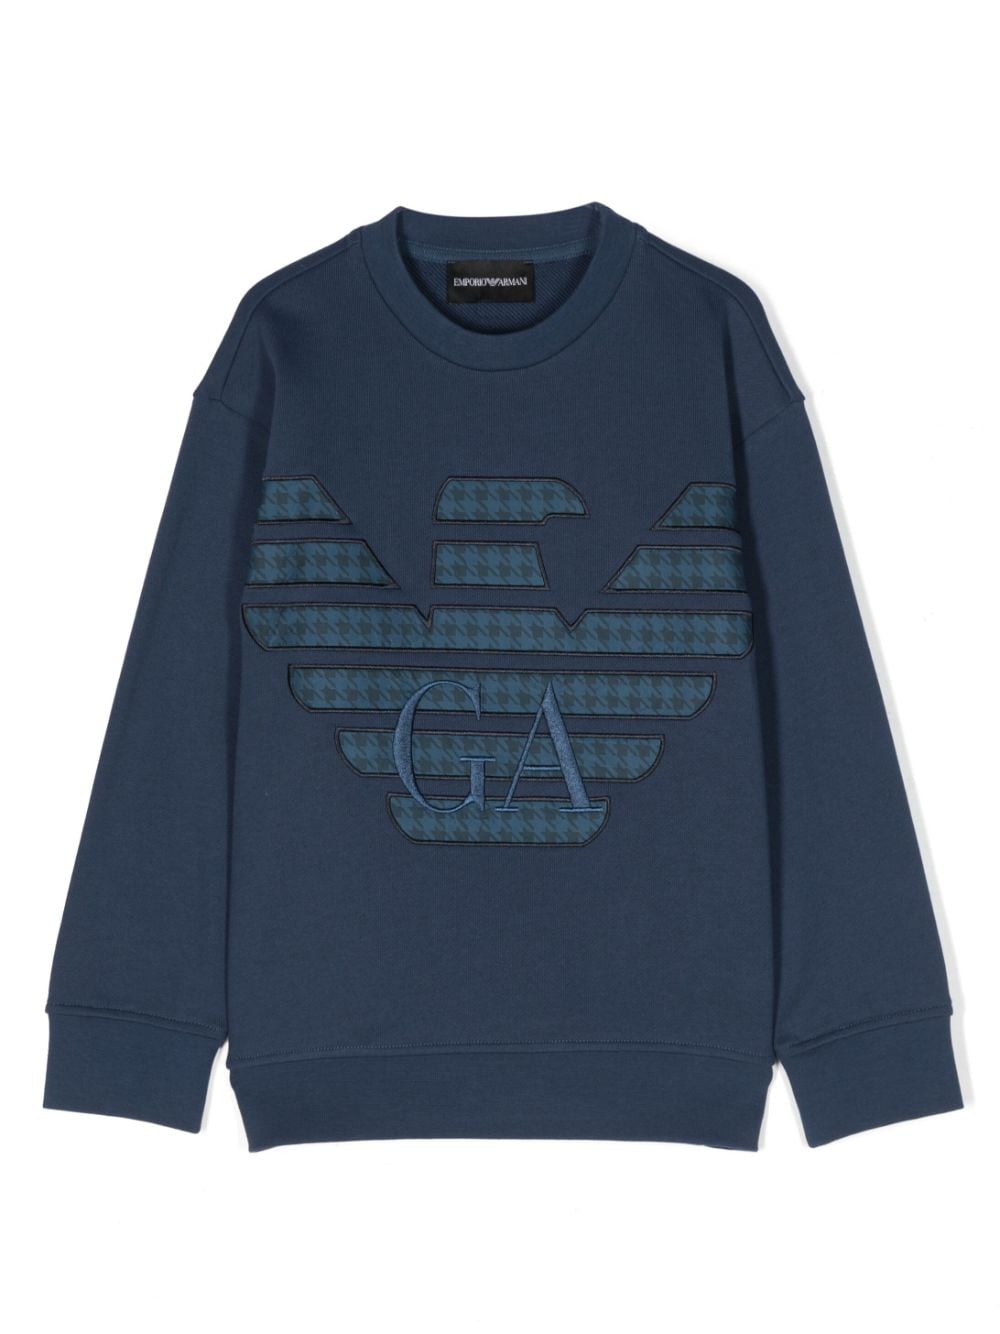 Emporio Armani Kids sweatshirt with logo